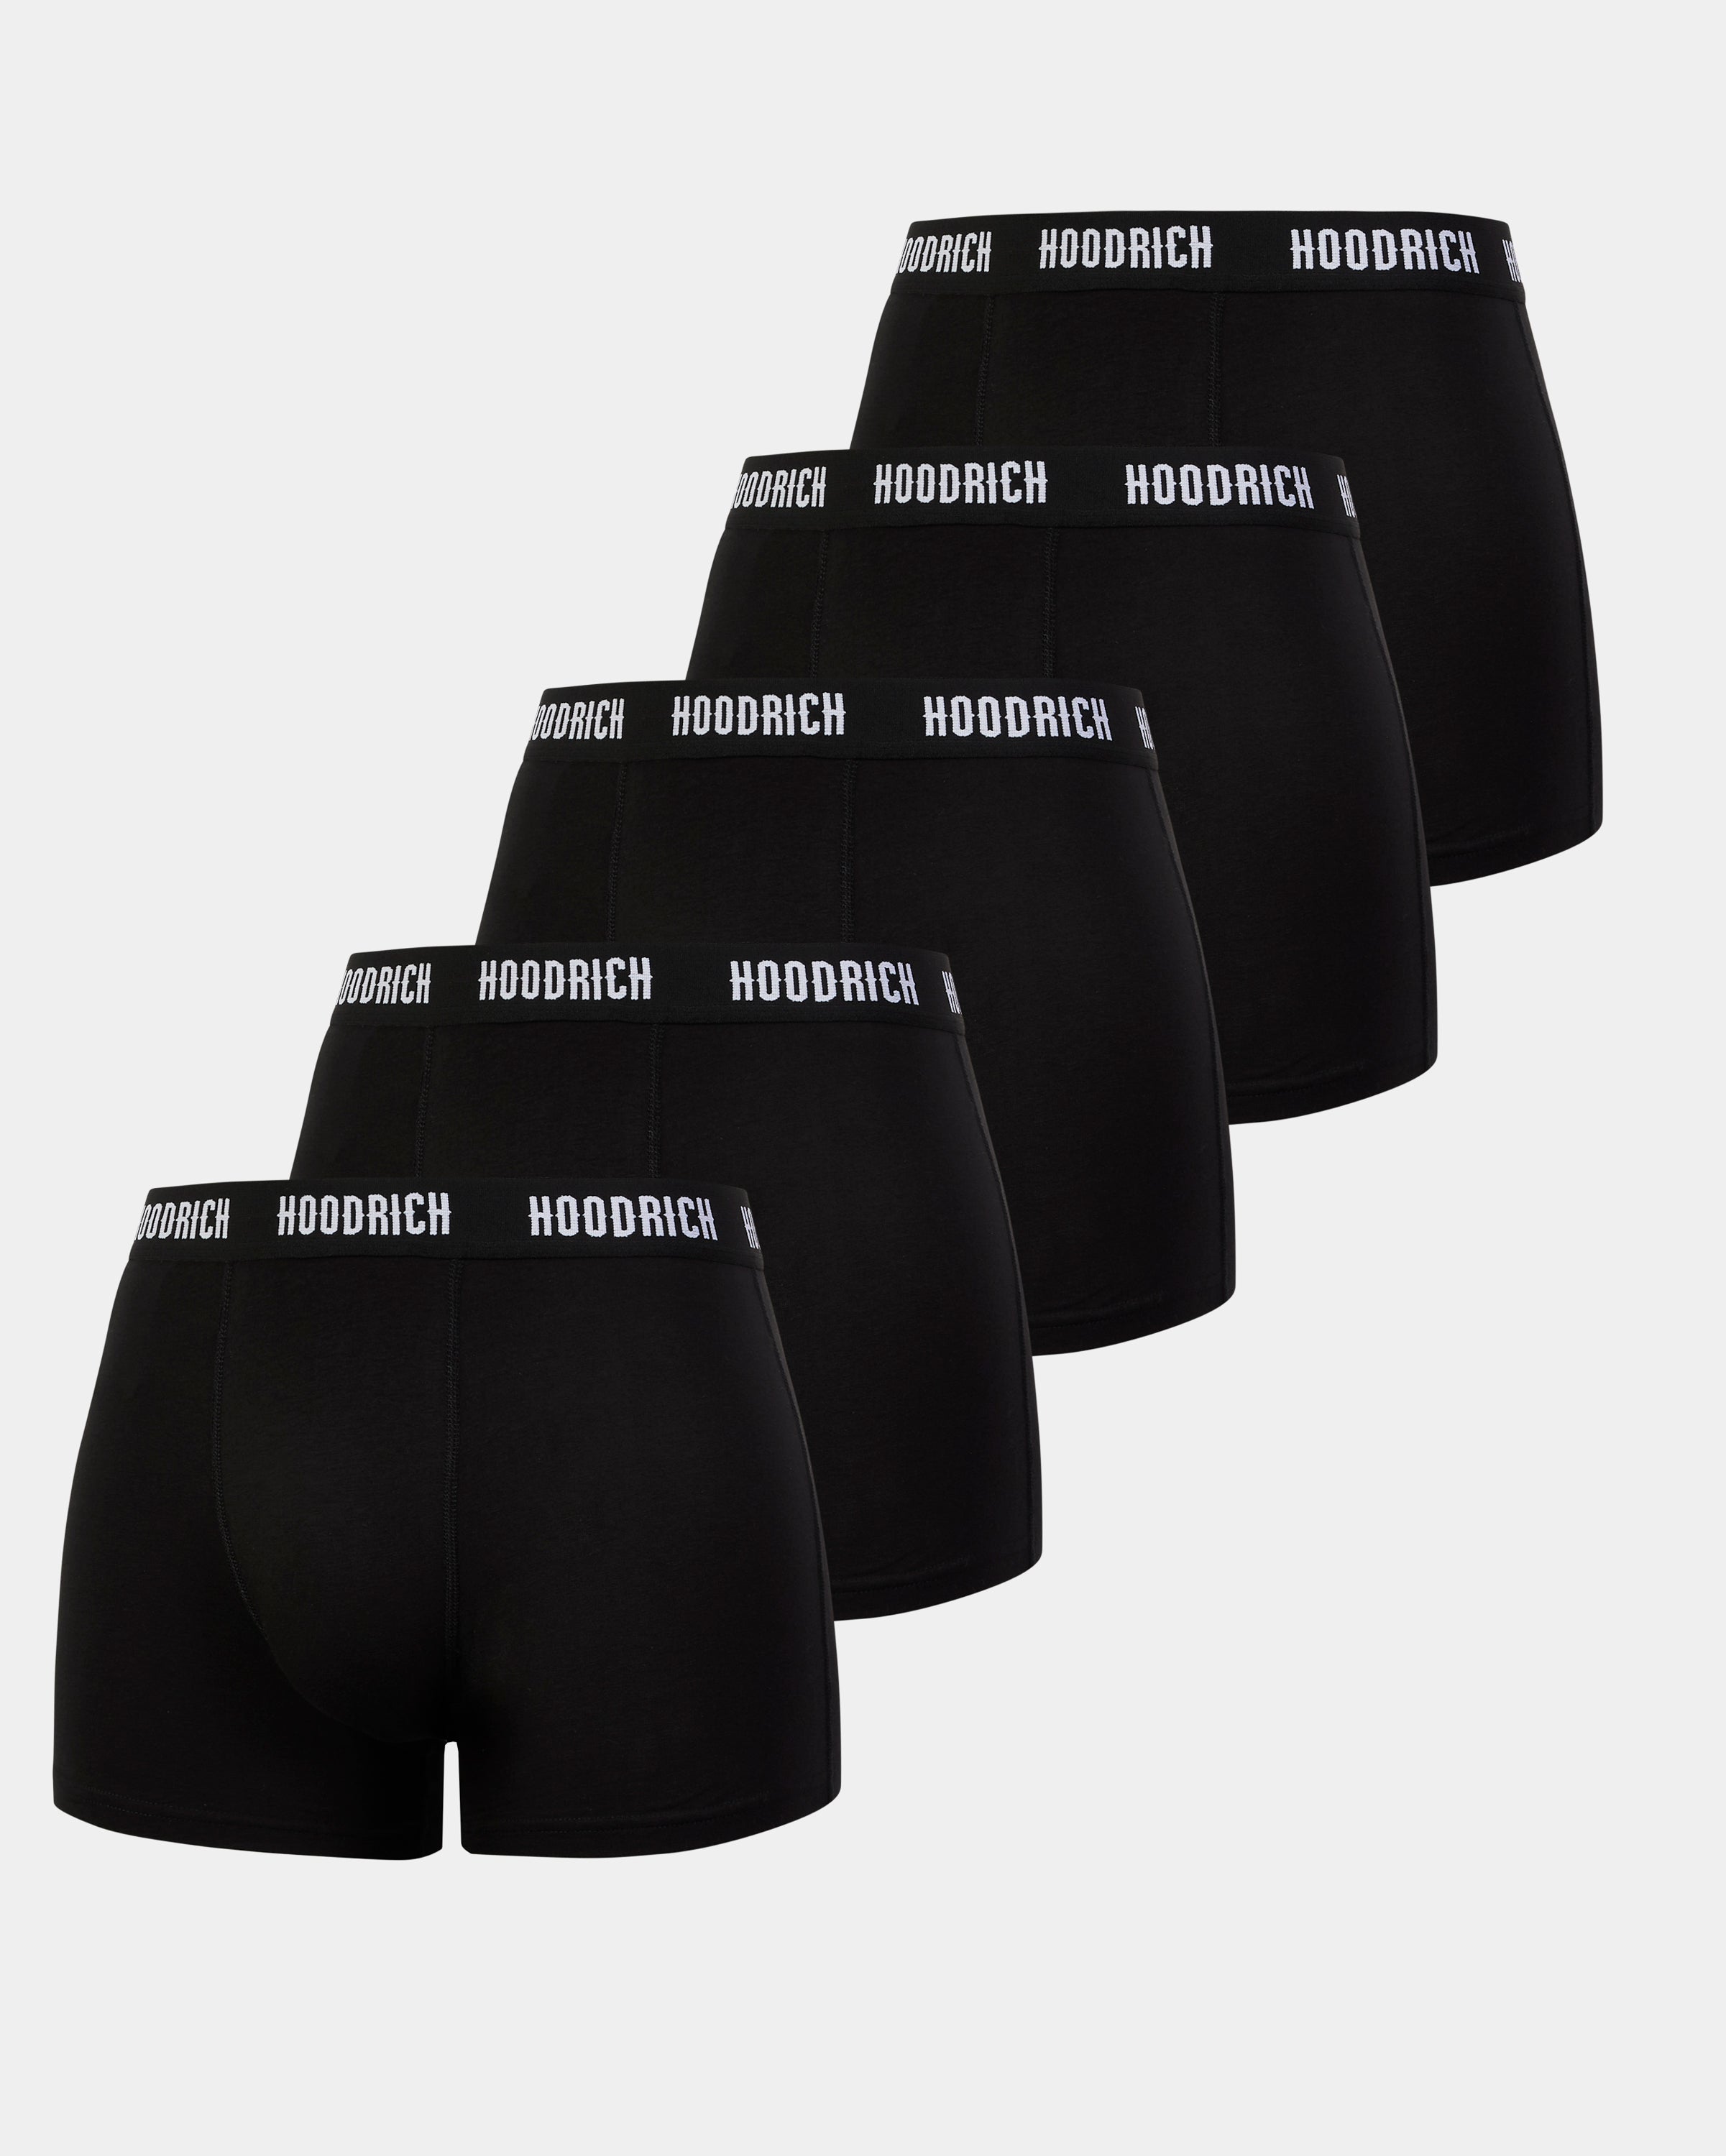 Penguin Men's Boxers 4 Pack in Black | Costco UK